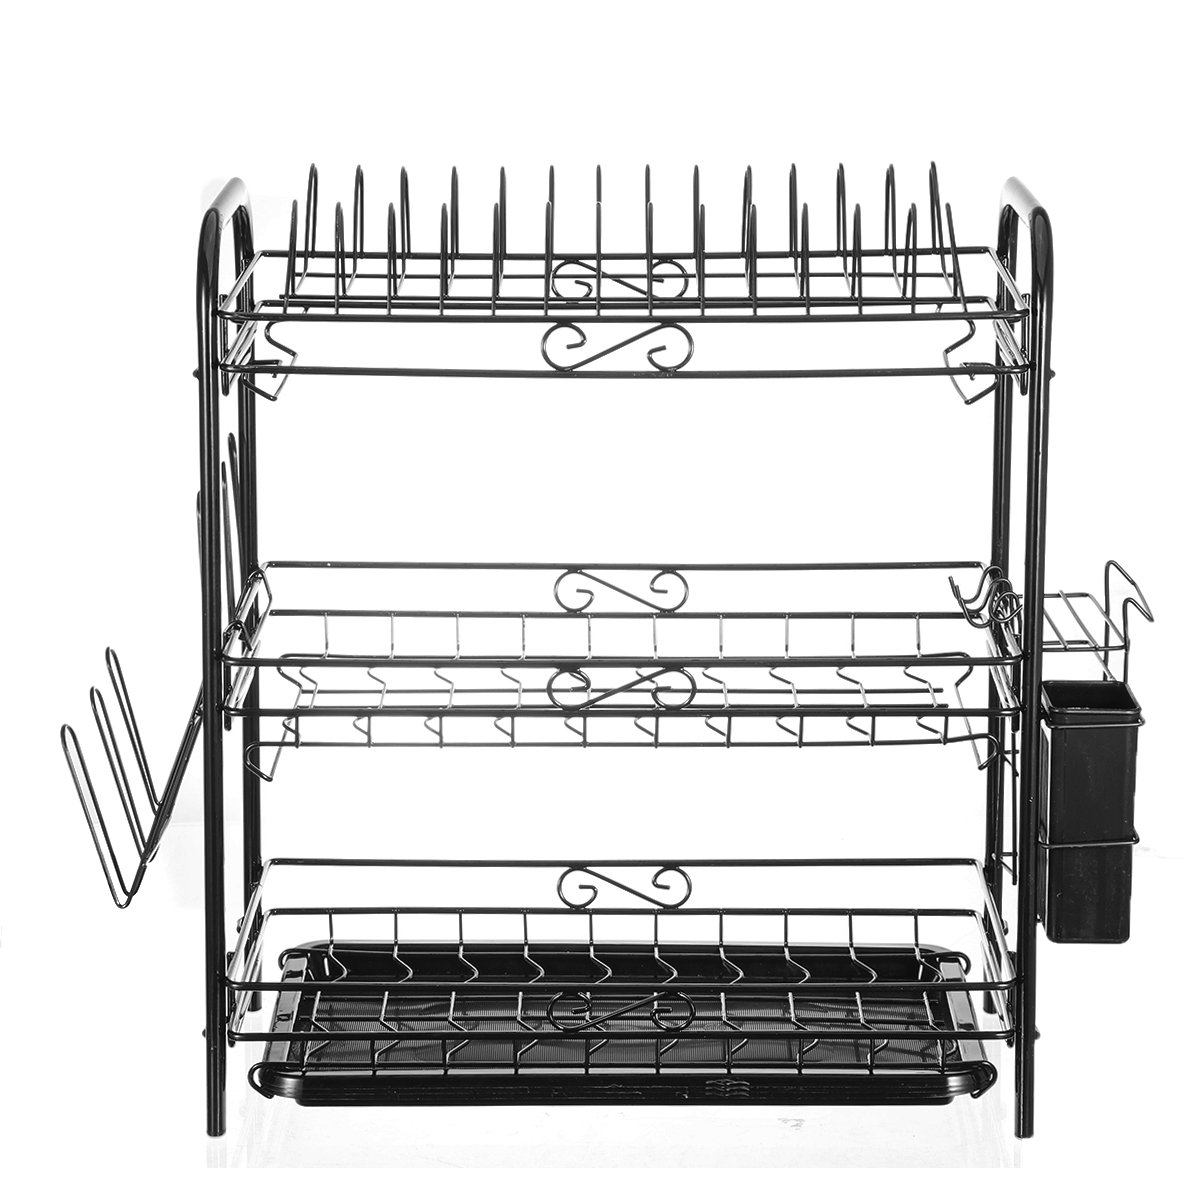 Stainless-Steel-Dish-Rack-Sink-Bowl-Shelf-Nonslip-Cutlery-Holder-Kitchen-Drying-Rack-Organizer-for-K-1764889-3